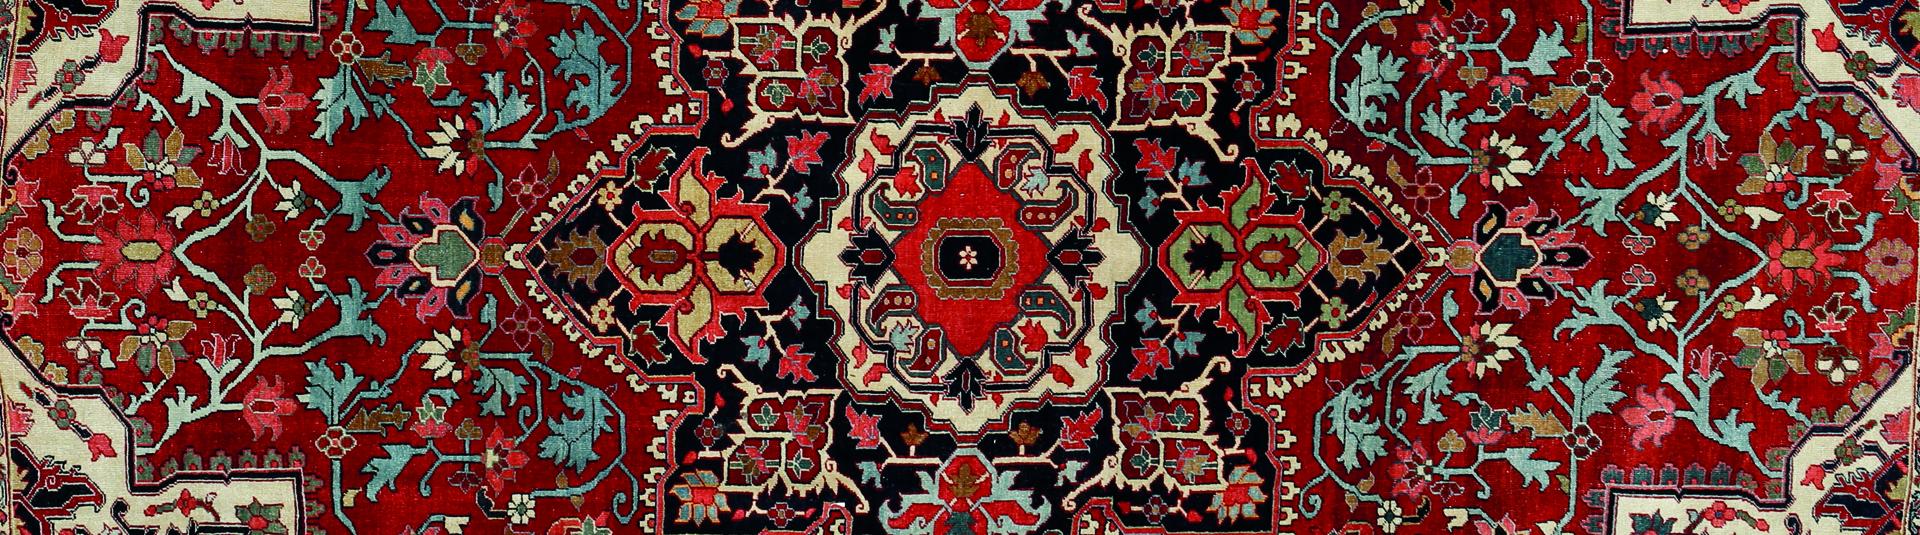 Close-up carpet pattern 2020